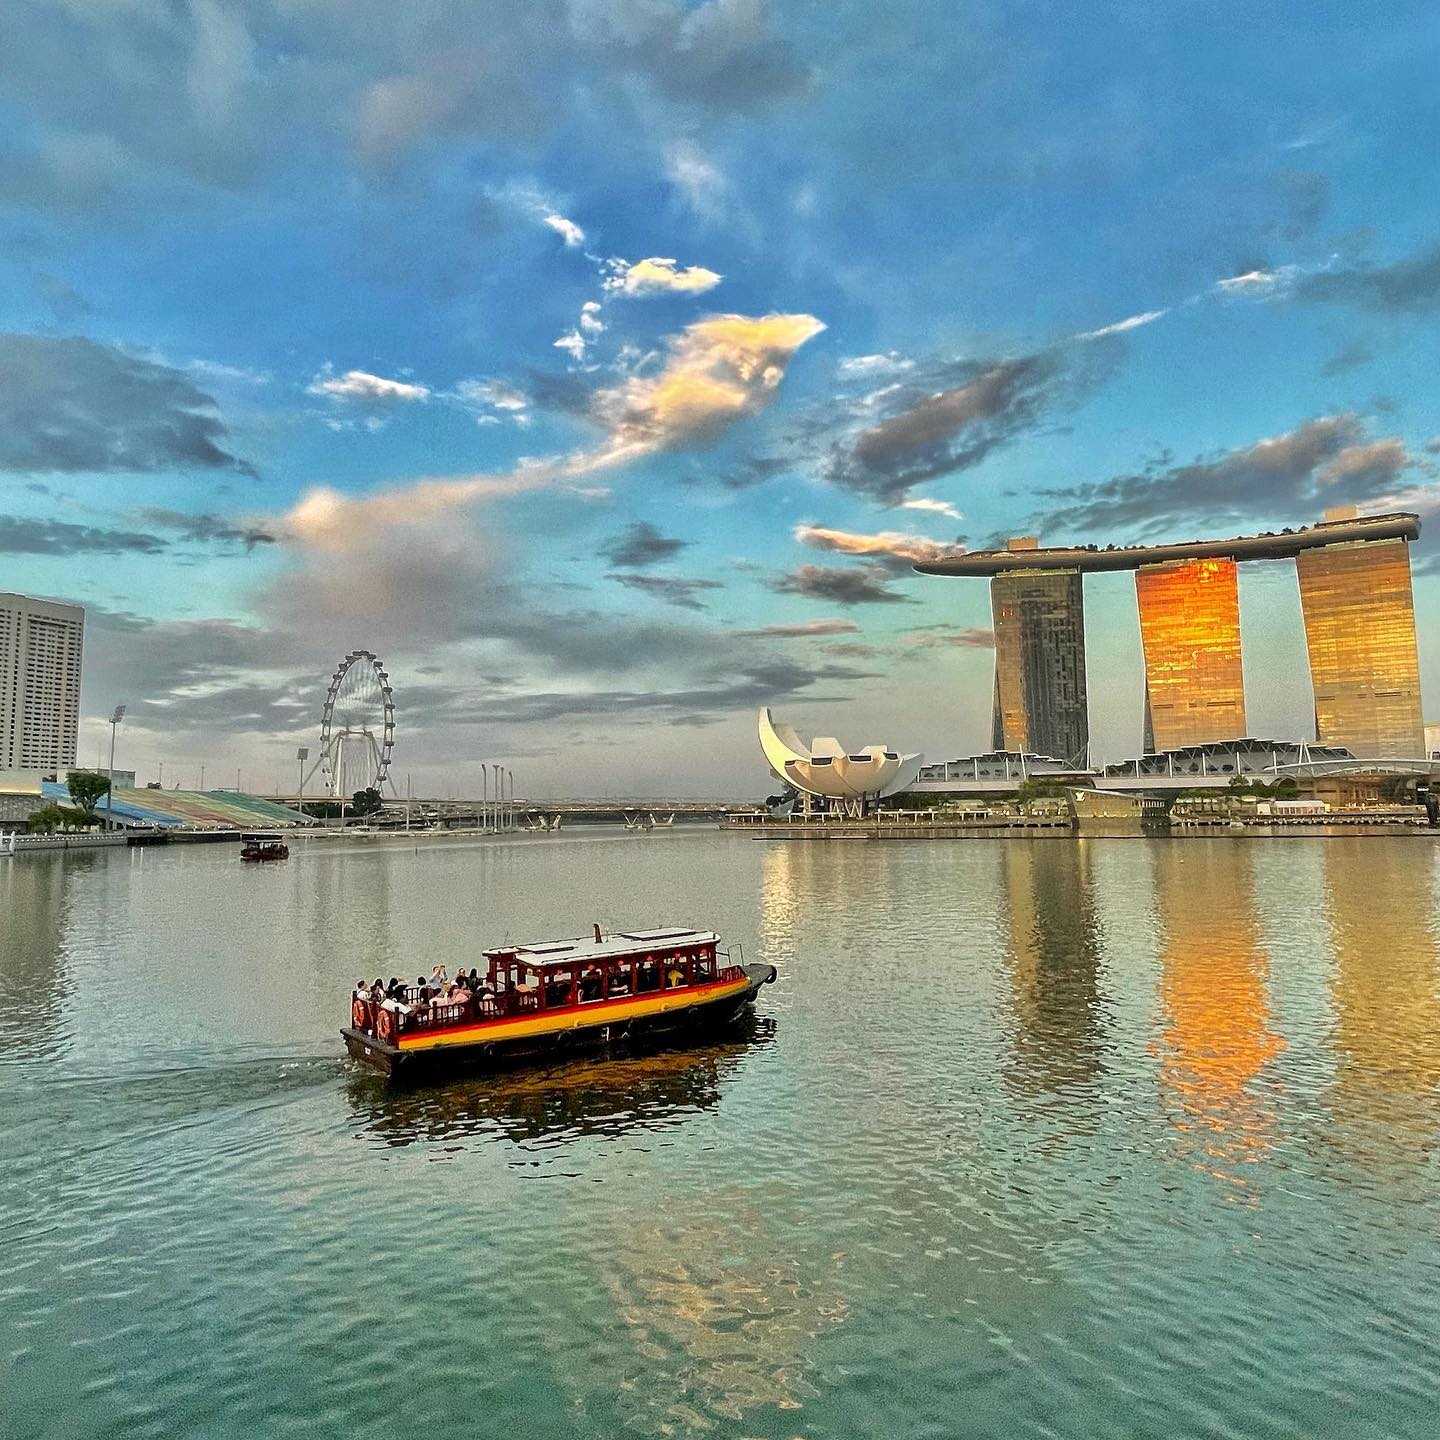 Sunrise & sunset spots in Singapore - Marina Bay